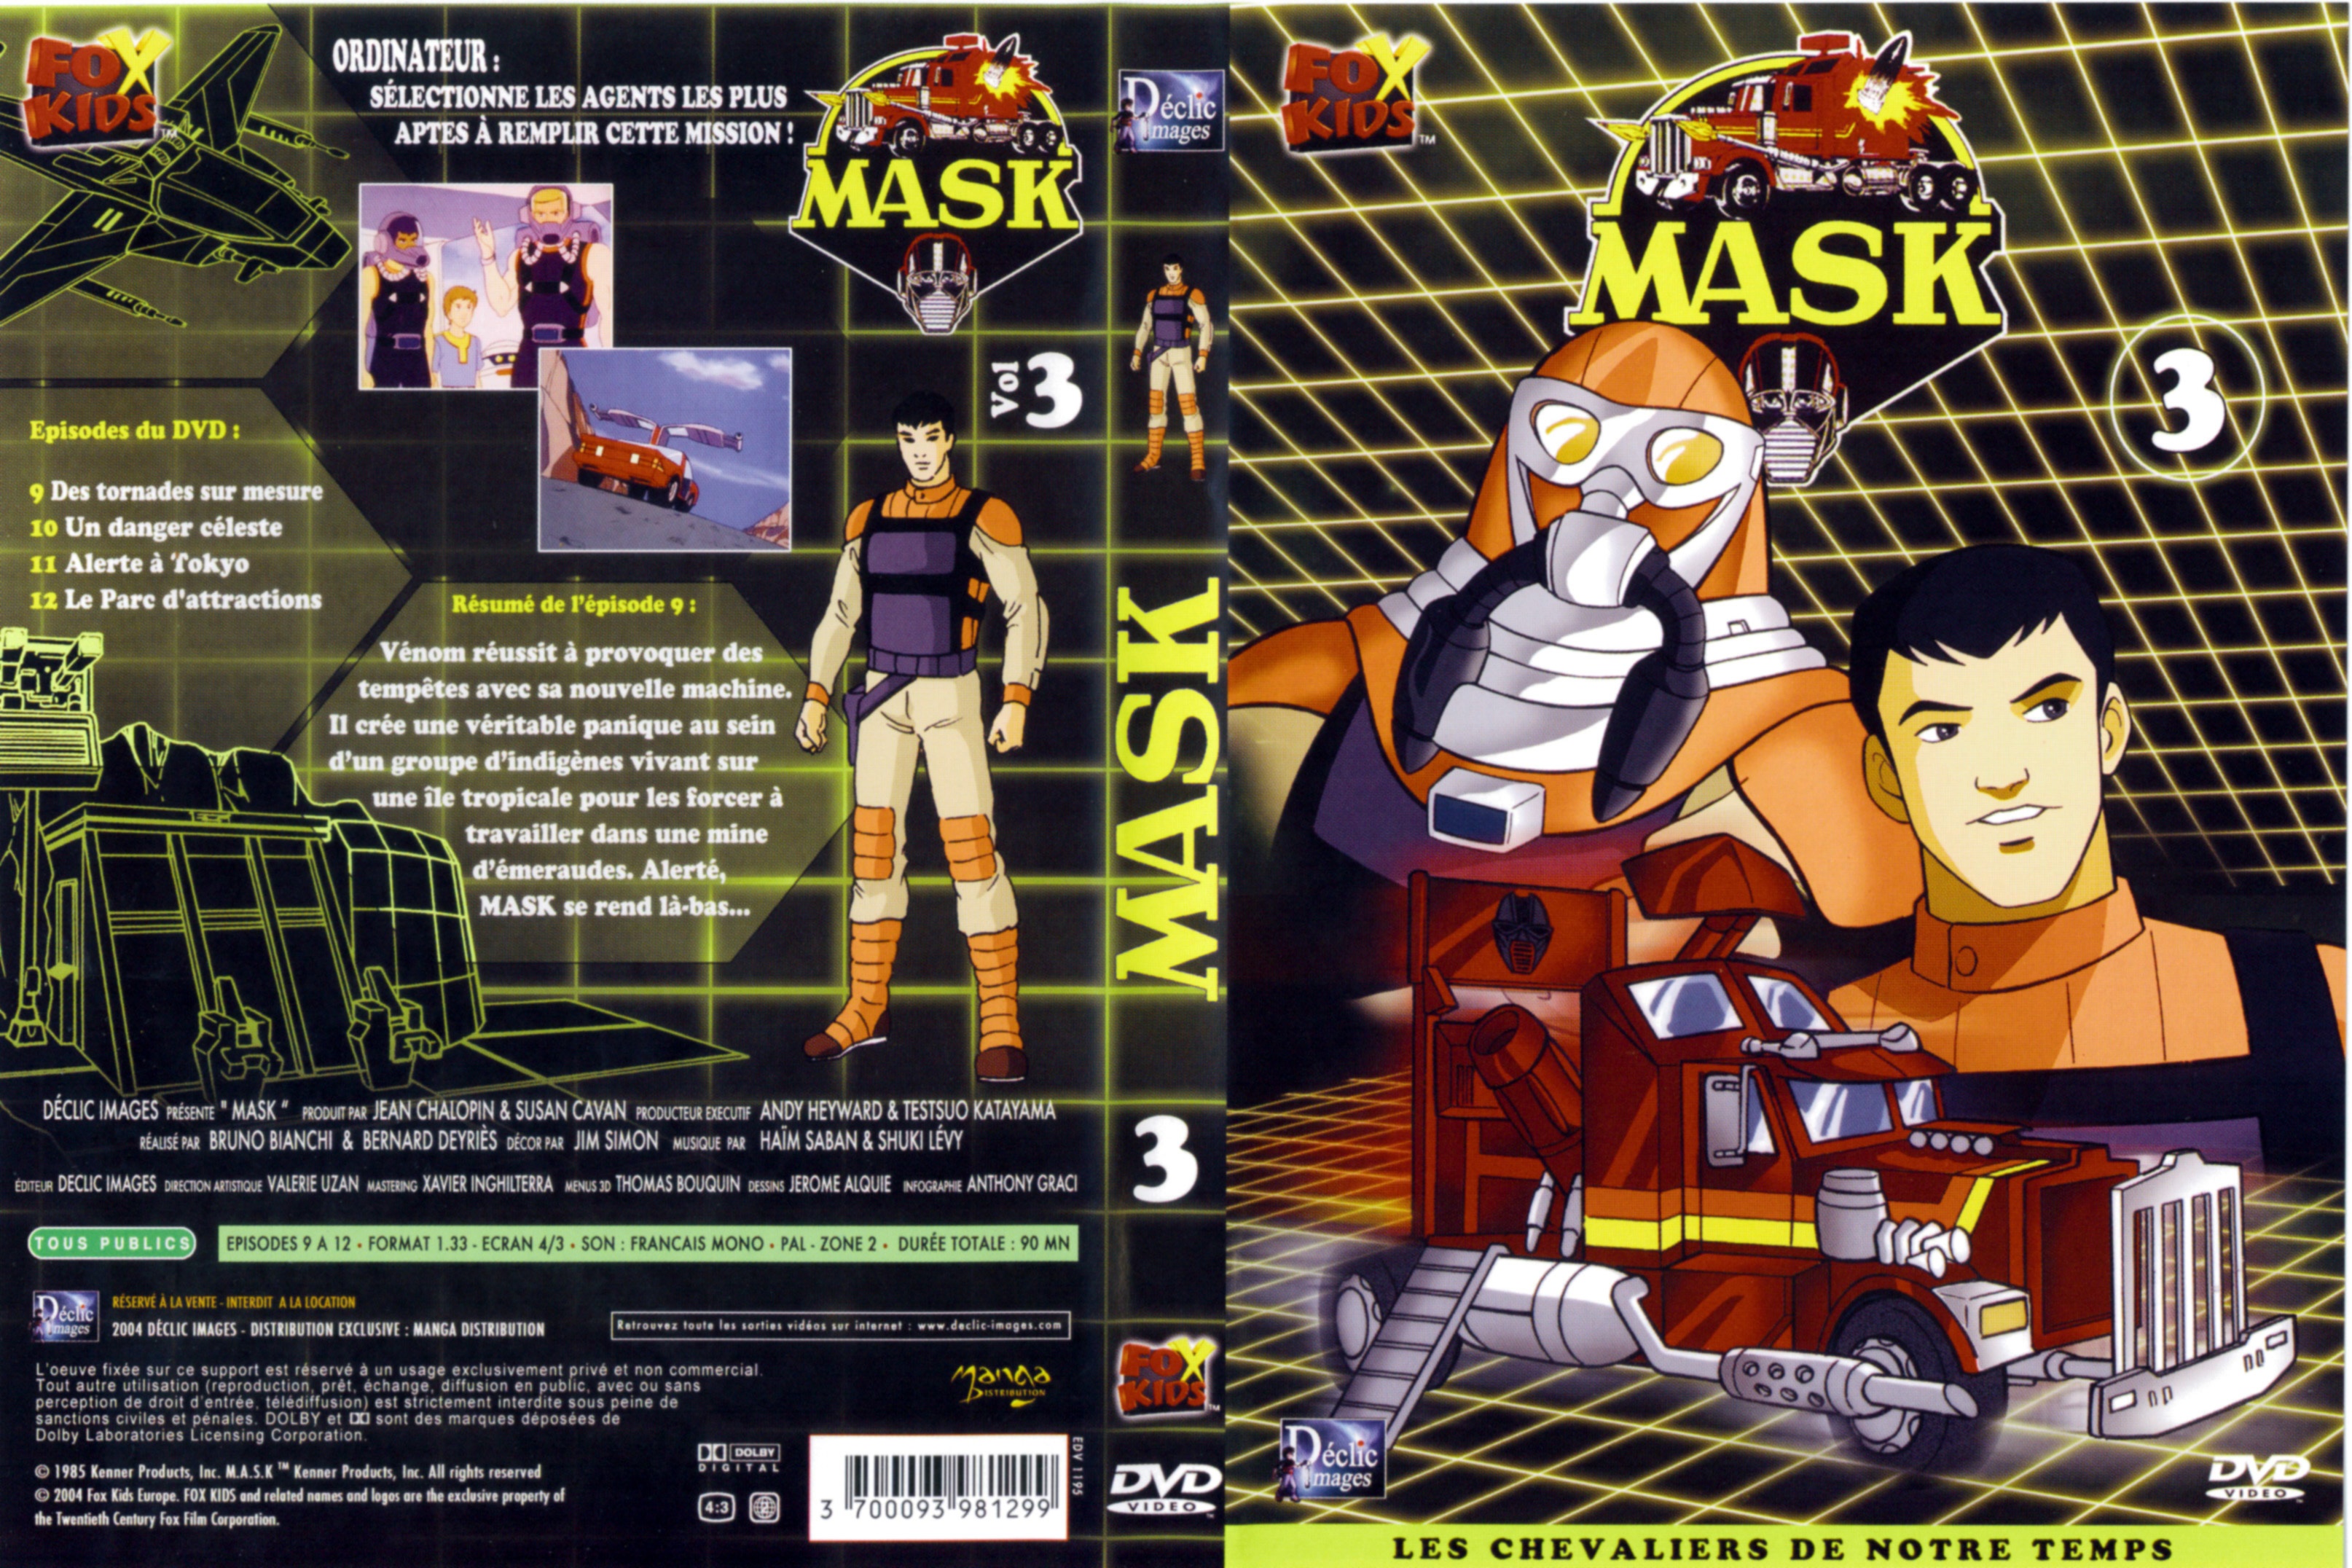 Jaquette DVD Mask vol 03